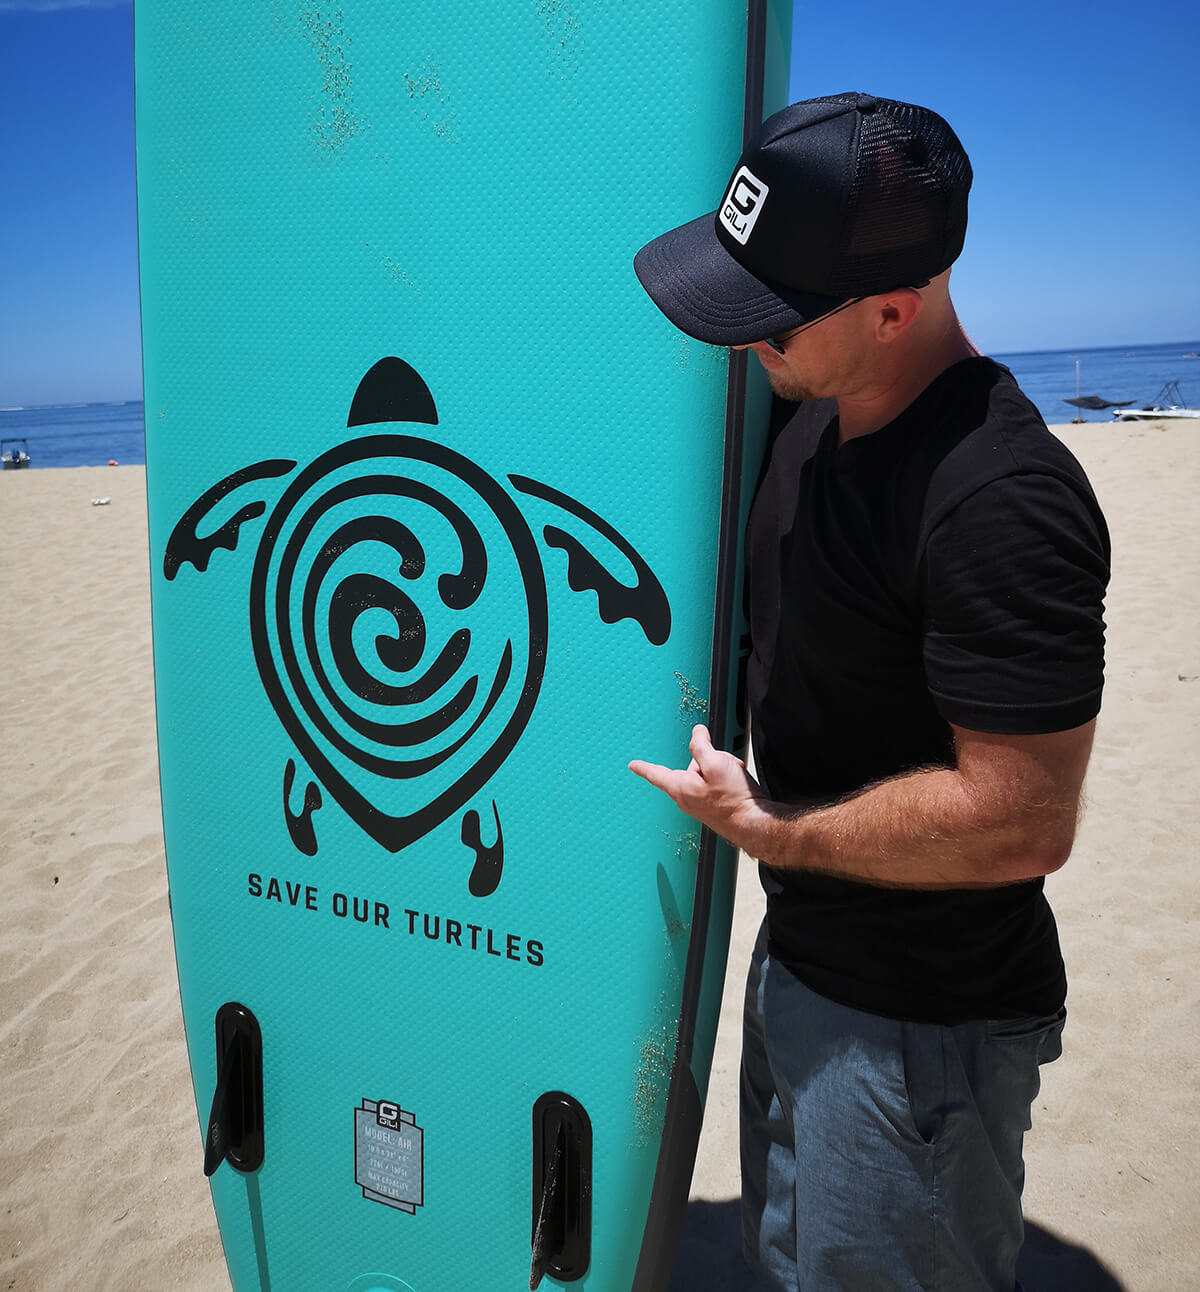 GILI Air Inflatable Paddle Board – Rette unsere Schildkröten